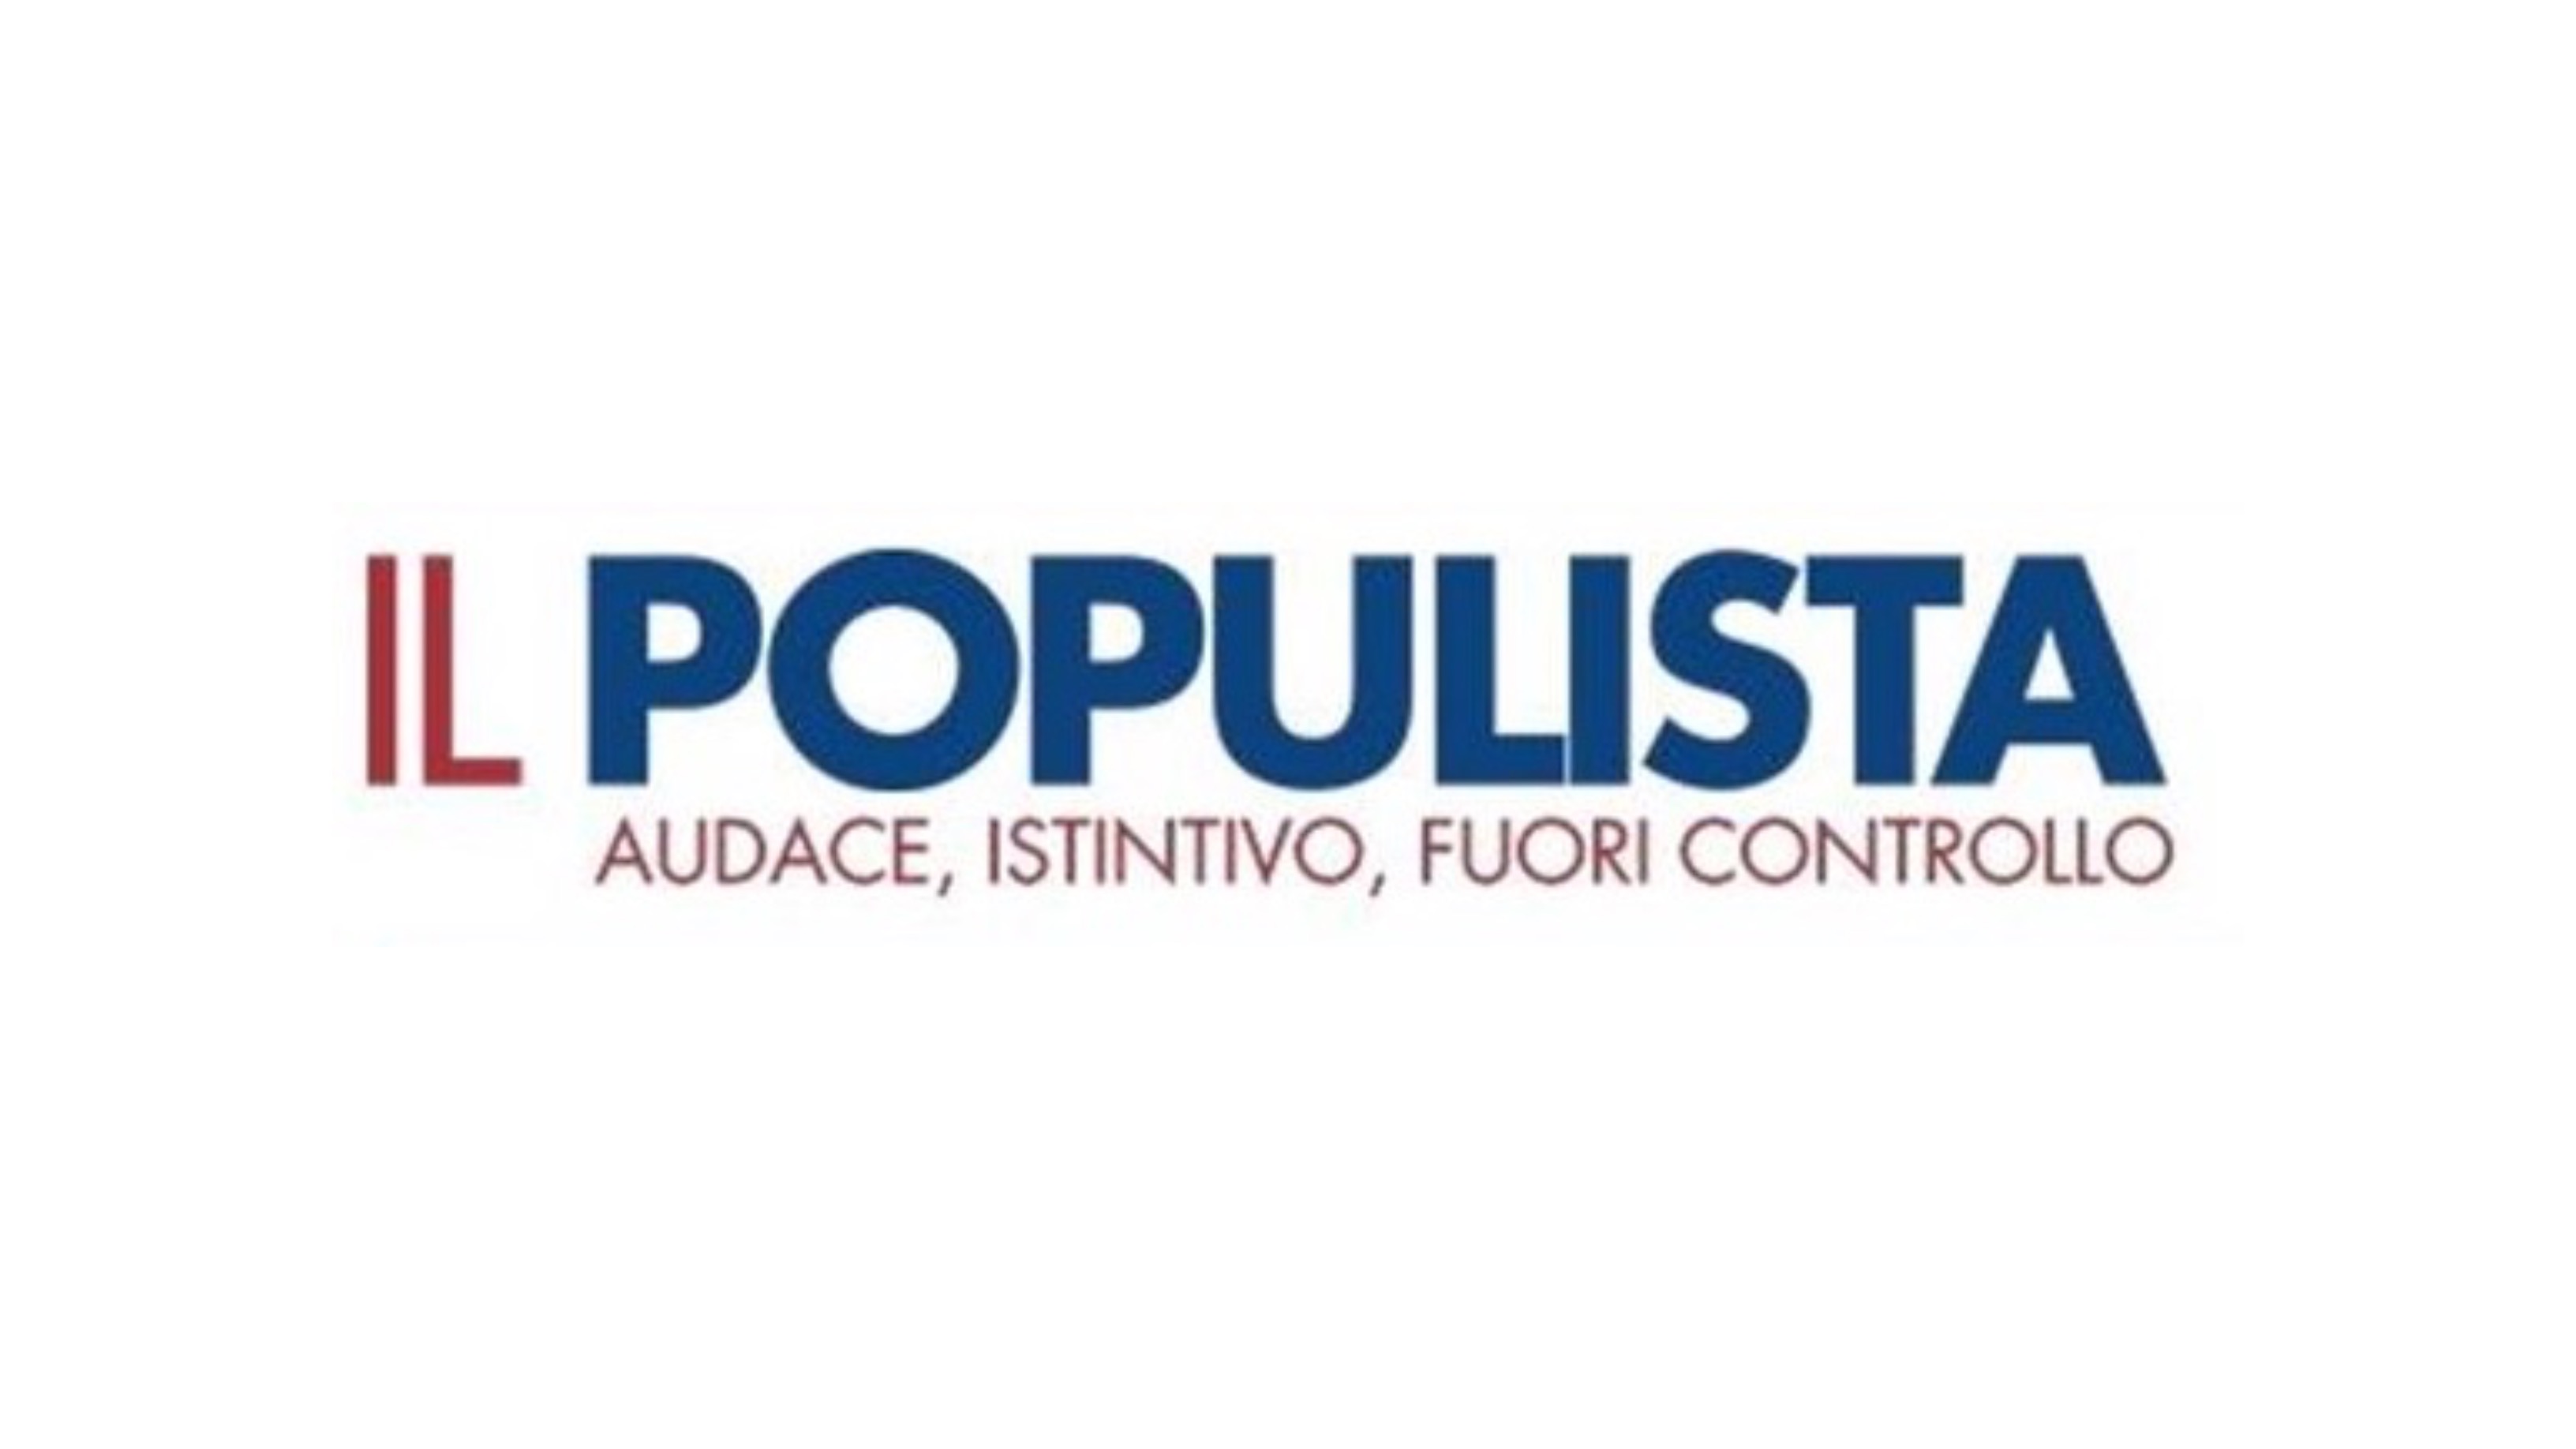 Populista logo